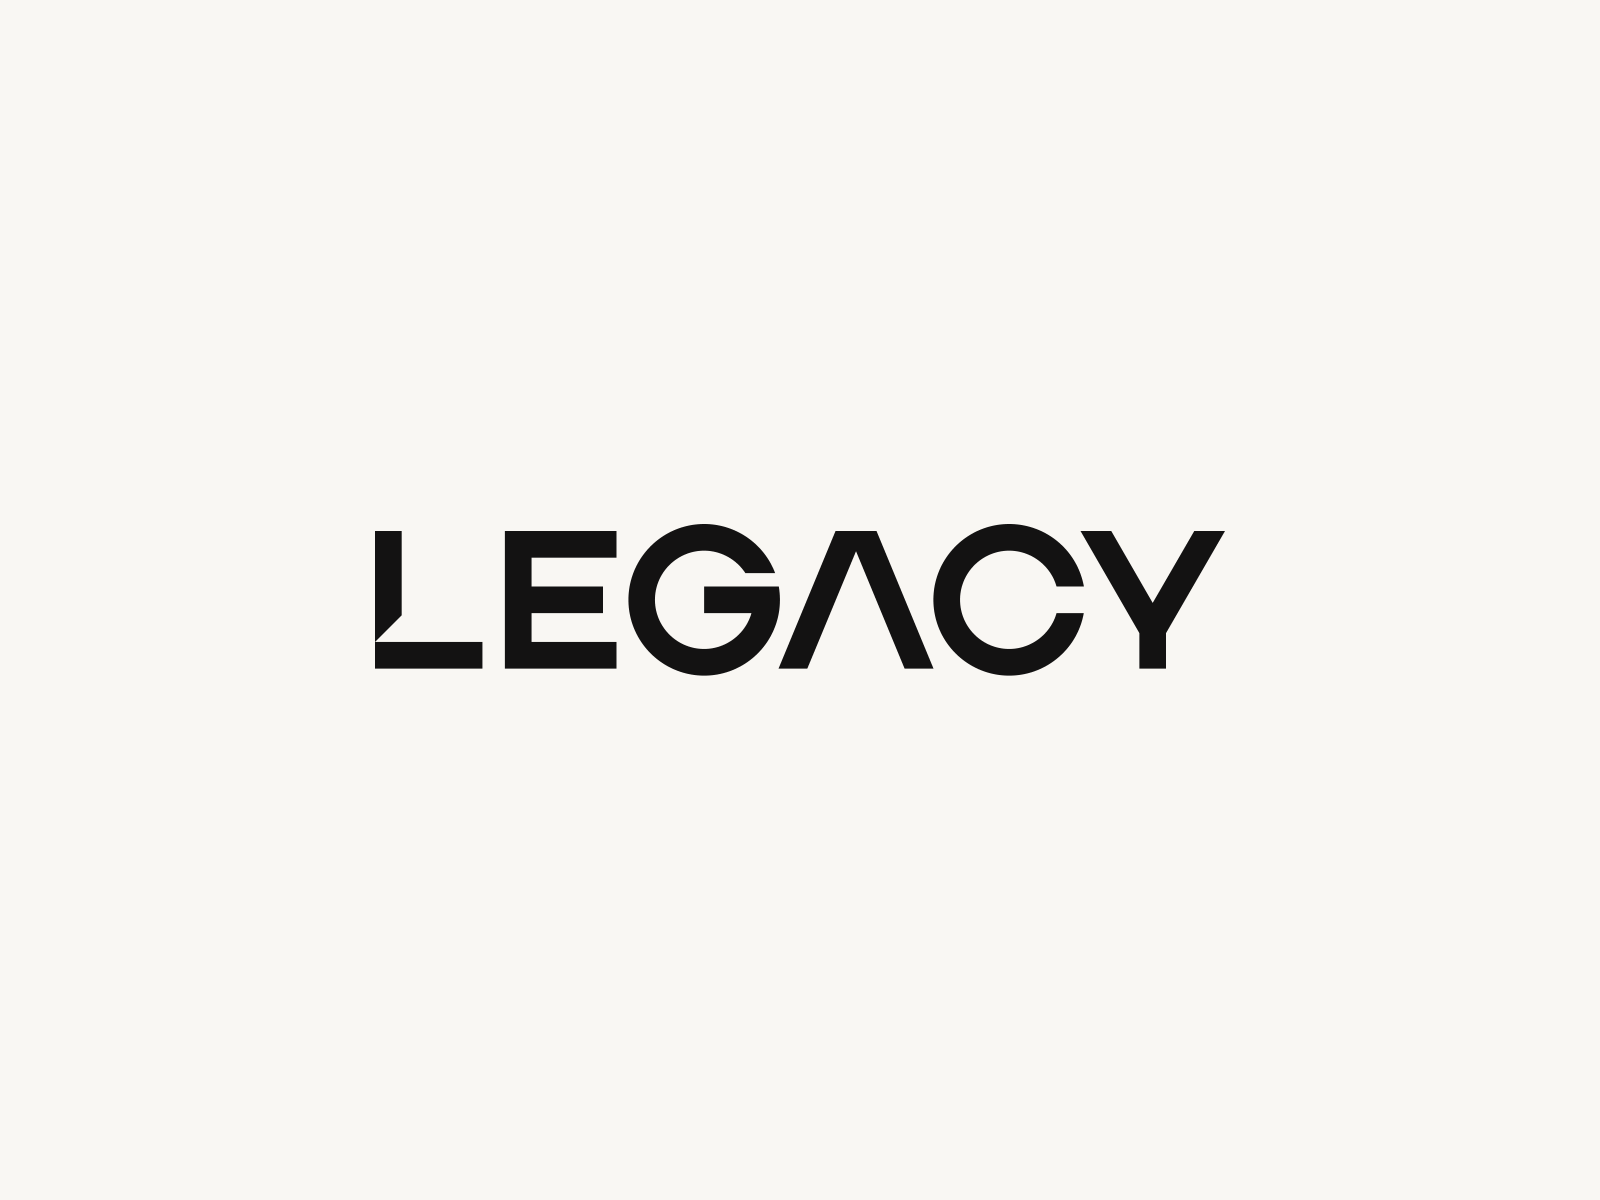 Legacy Logo PNG Transparent & SVG Vector - Freebie Supply